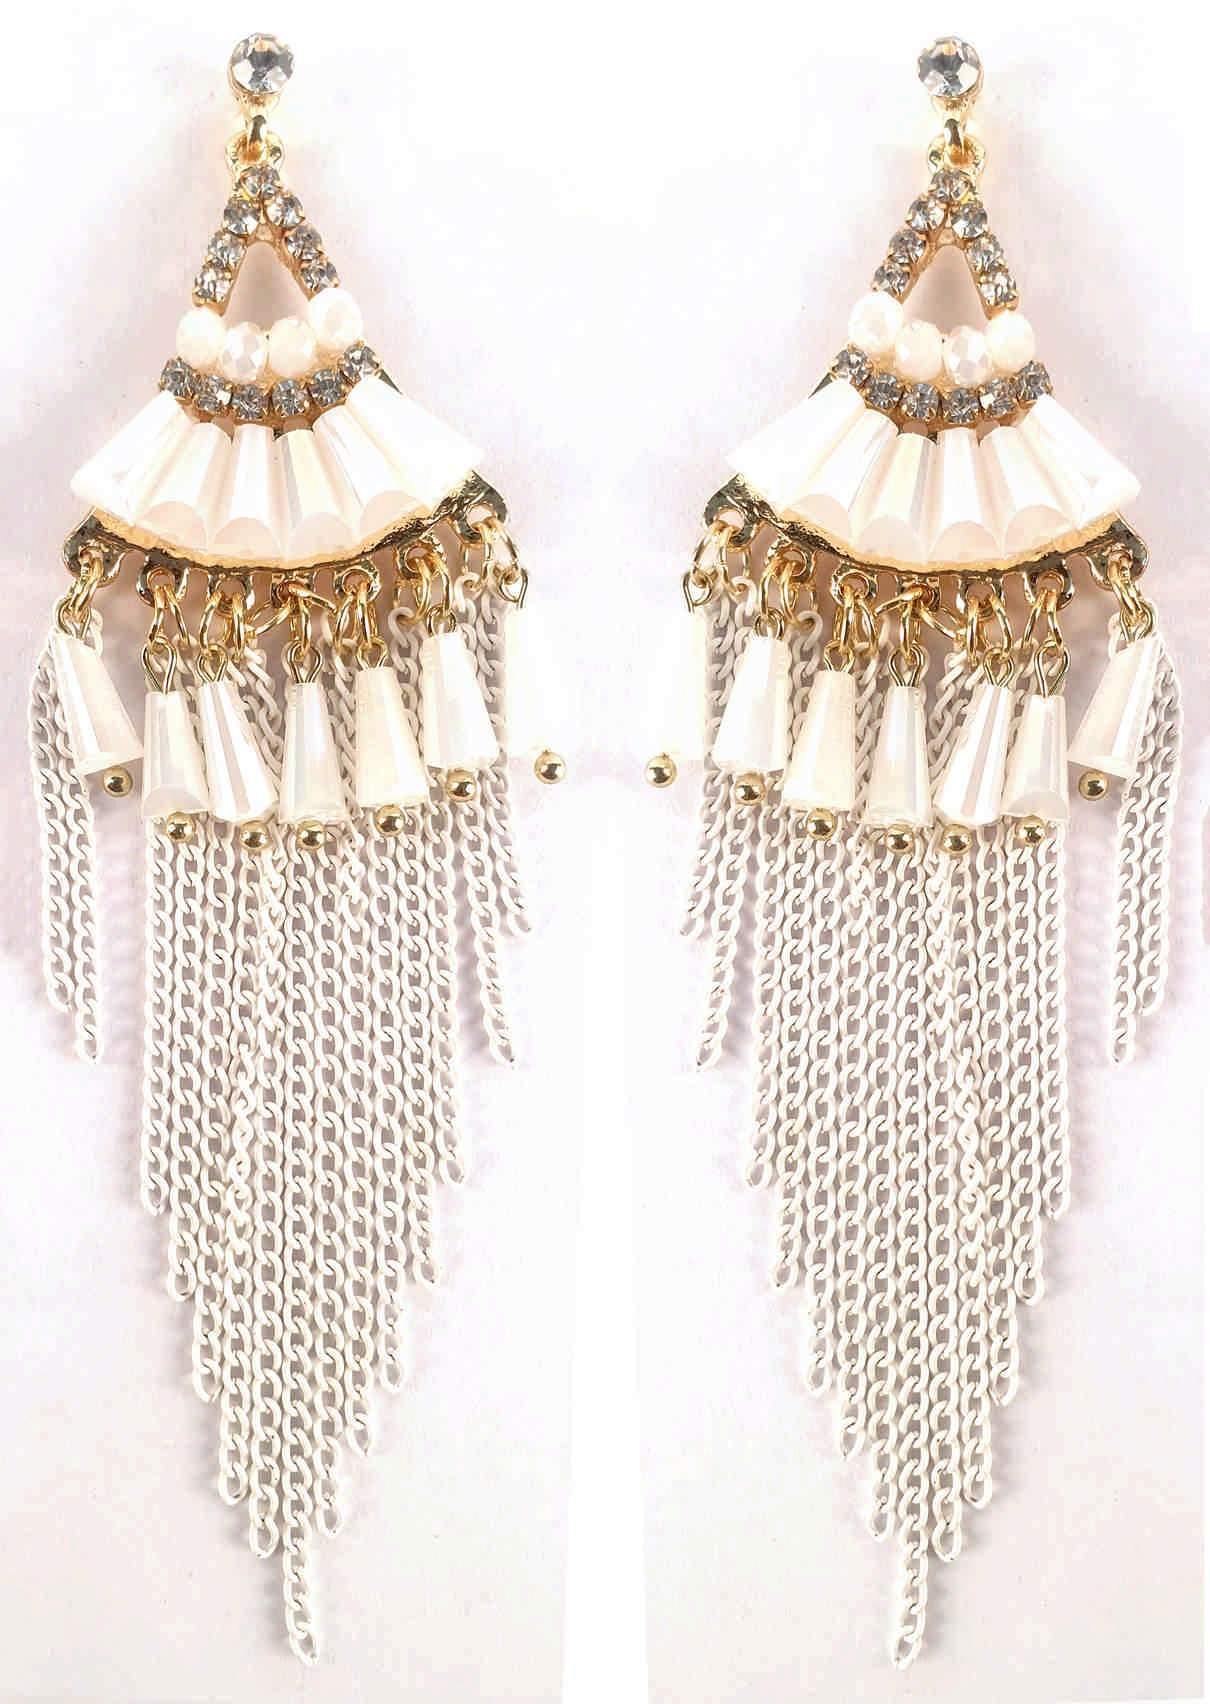 Indian Petals Chandelier Design Artificial Fashion Dangler Earrings Jhumka with Tassales for Girls Women, White